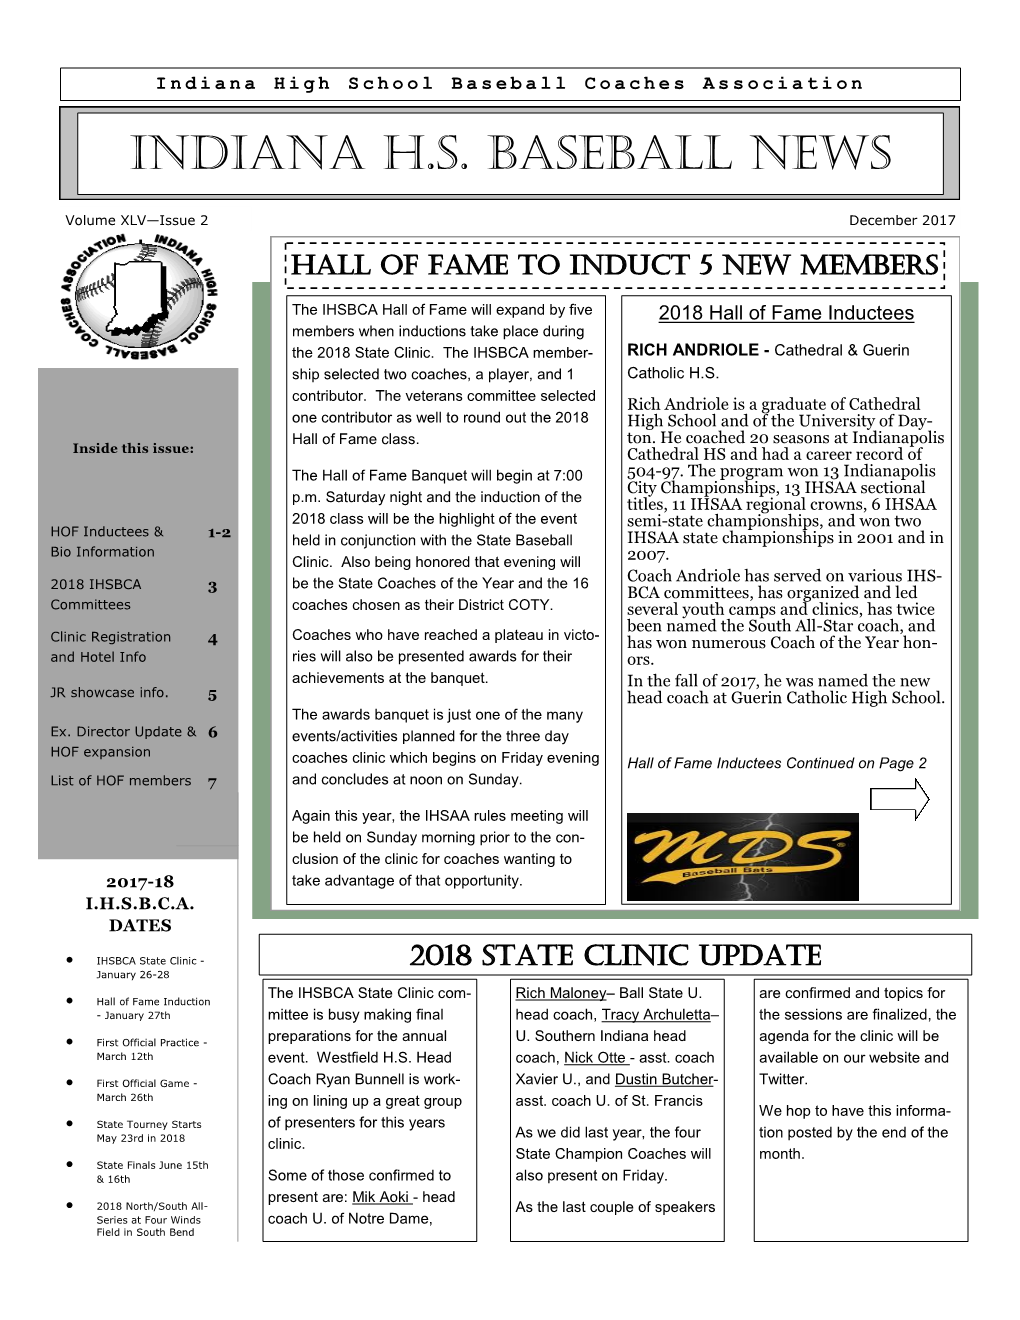 INDIANA H.S. Baseball News